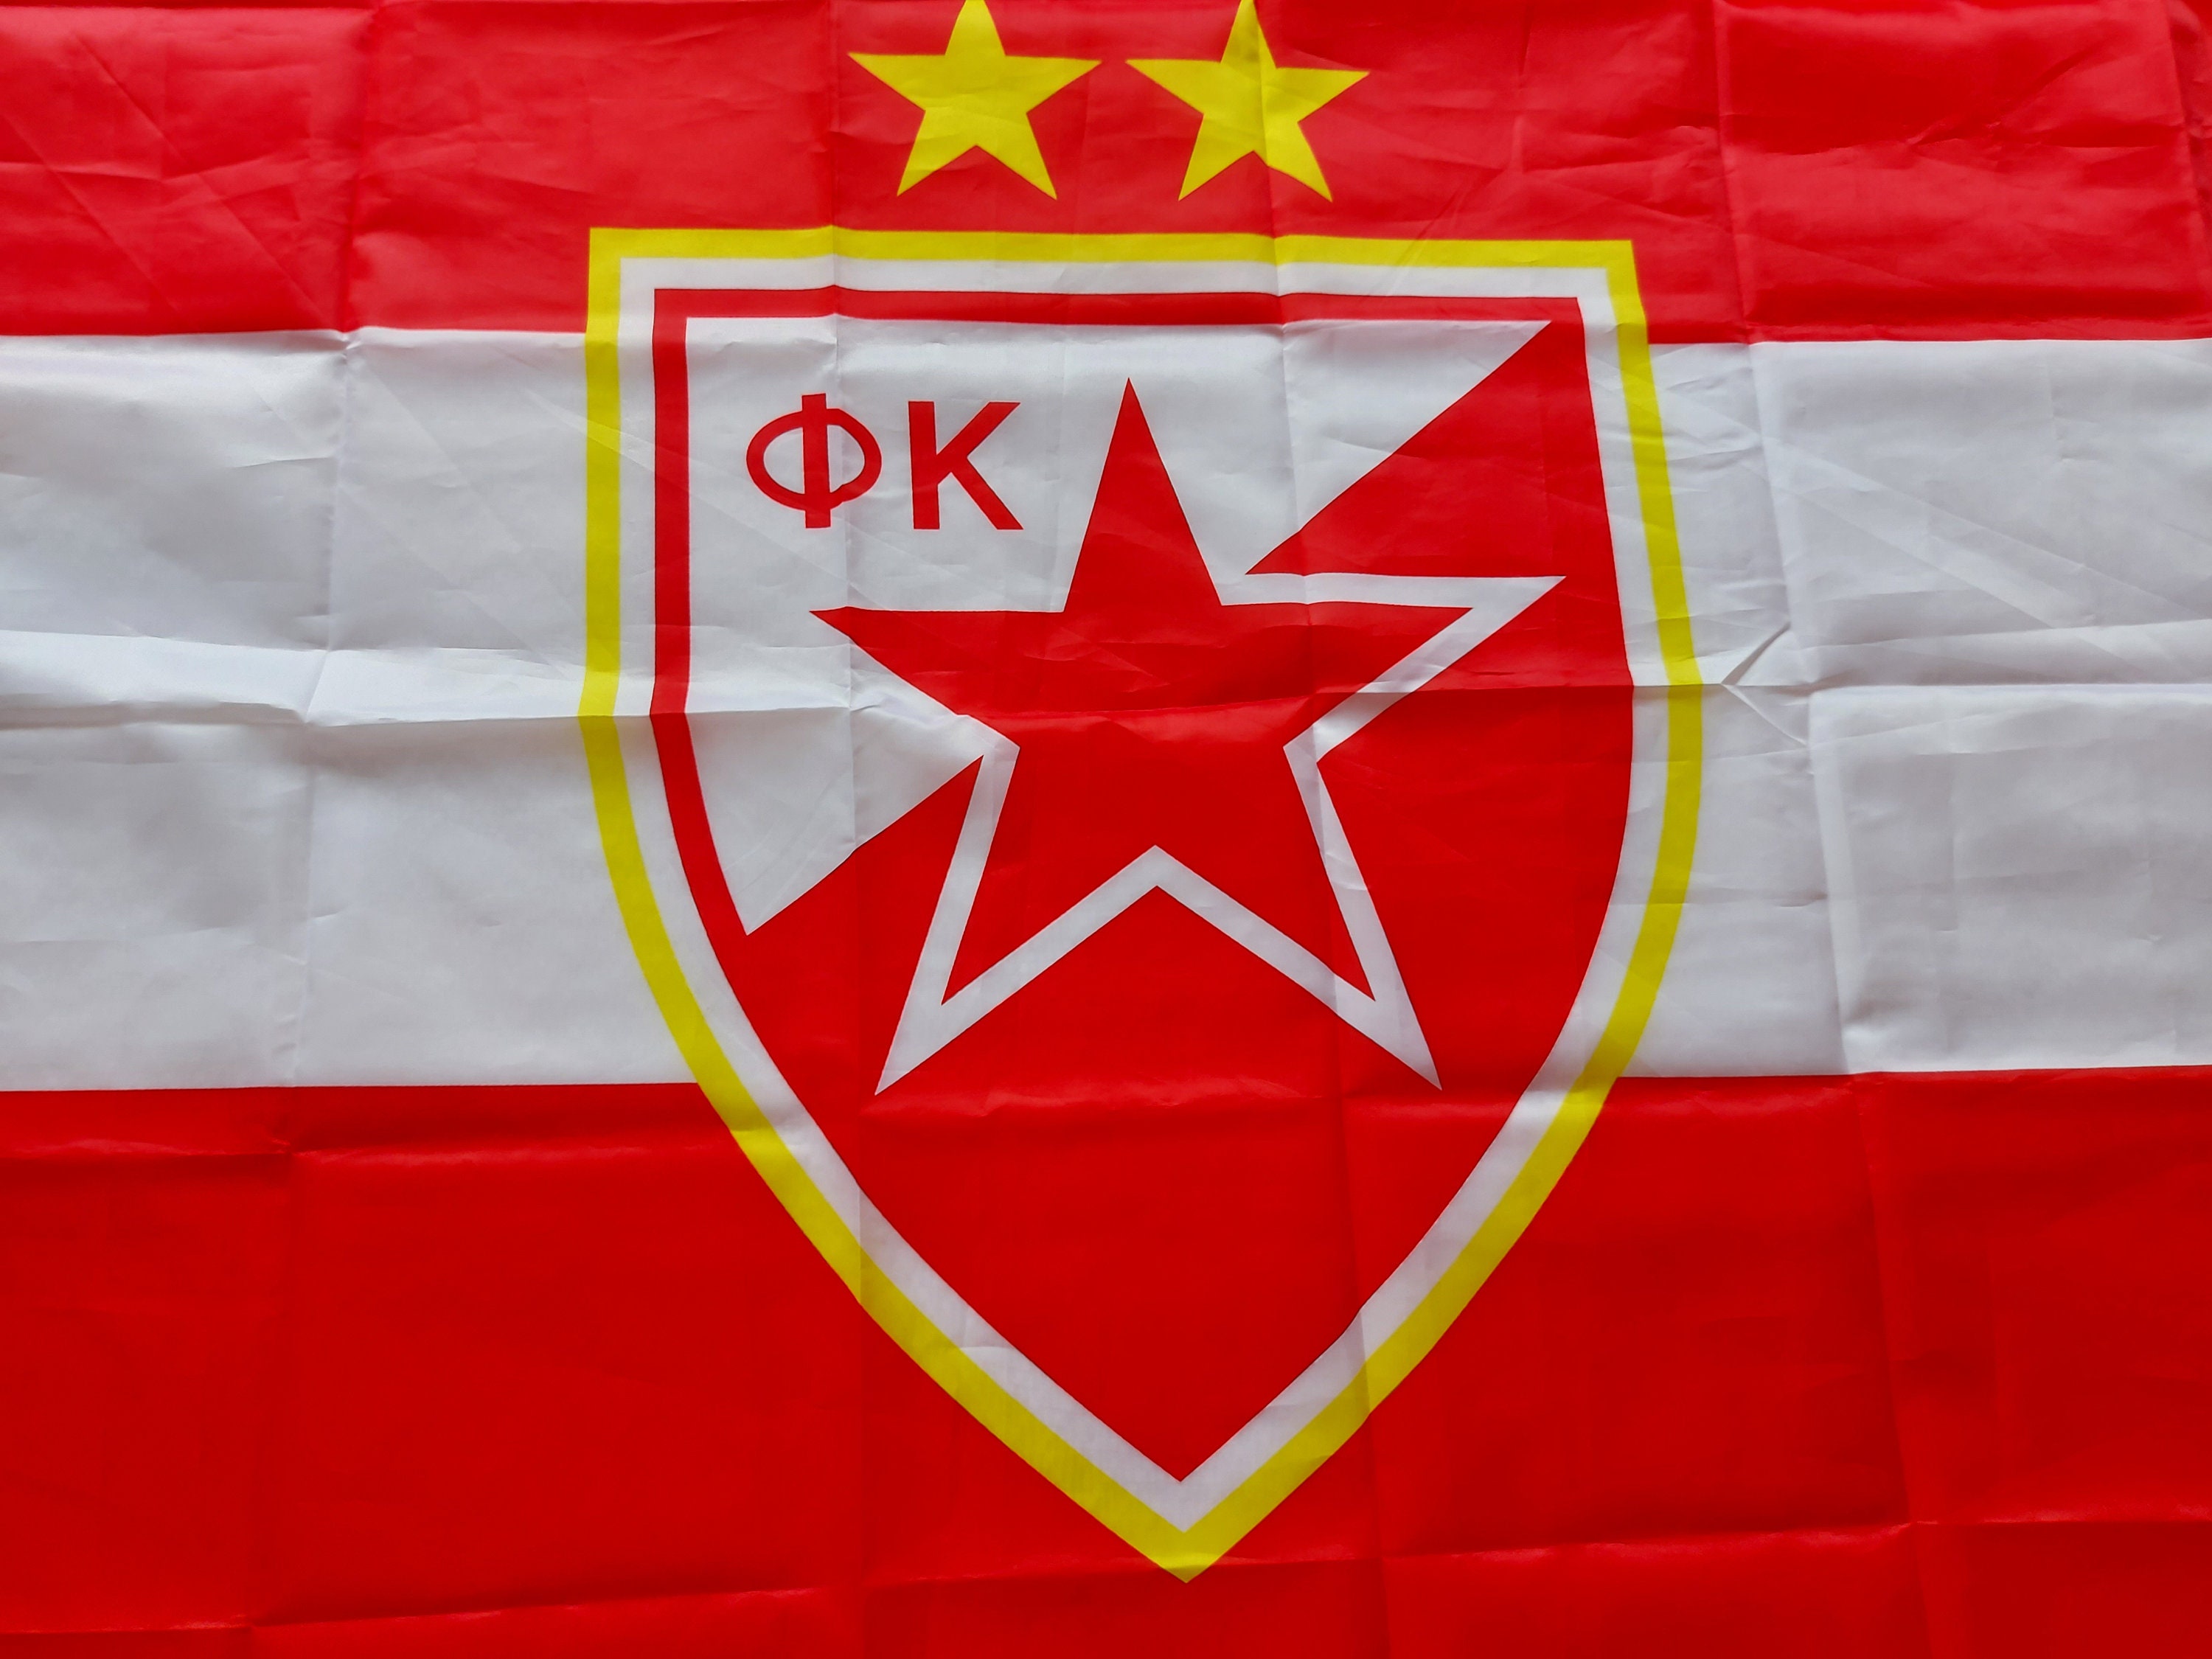 Big Red Star Crvena Zvezda Foodball Club Flag - approx 140 x 90cm (55 x  35in)